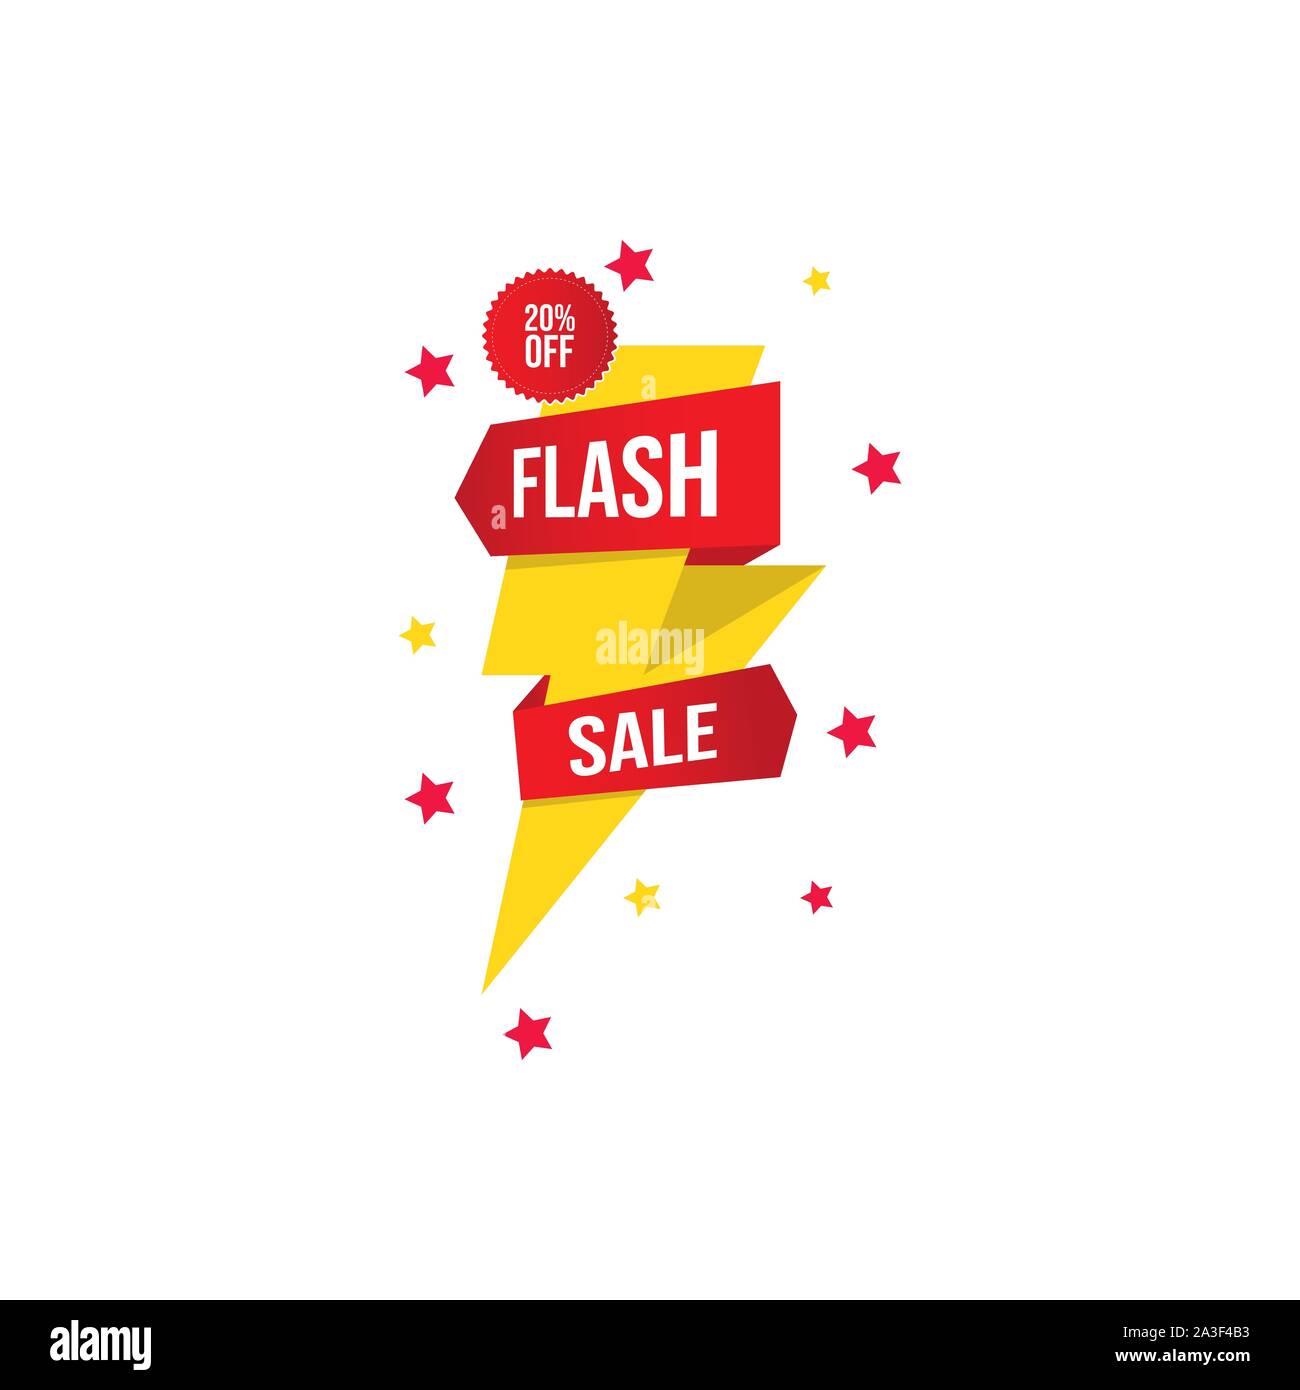 Free Vector  Creative yellow flash sale design in comic style